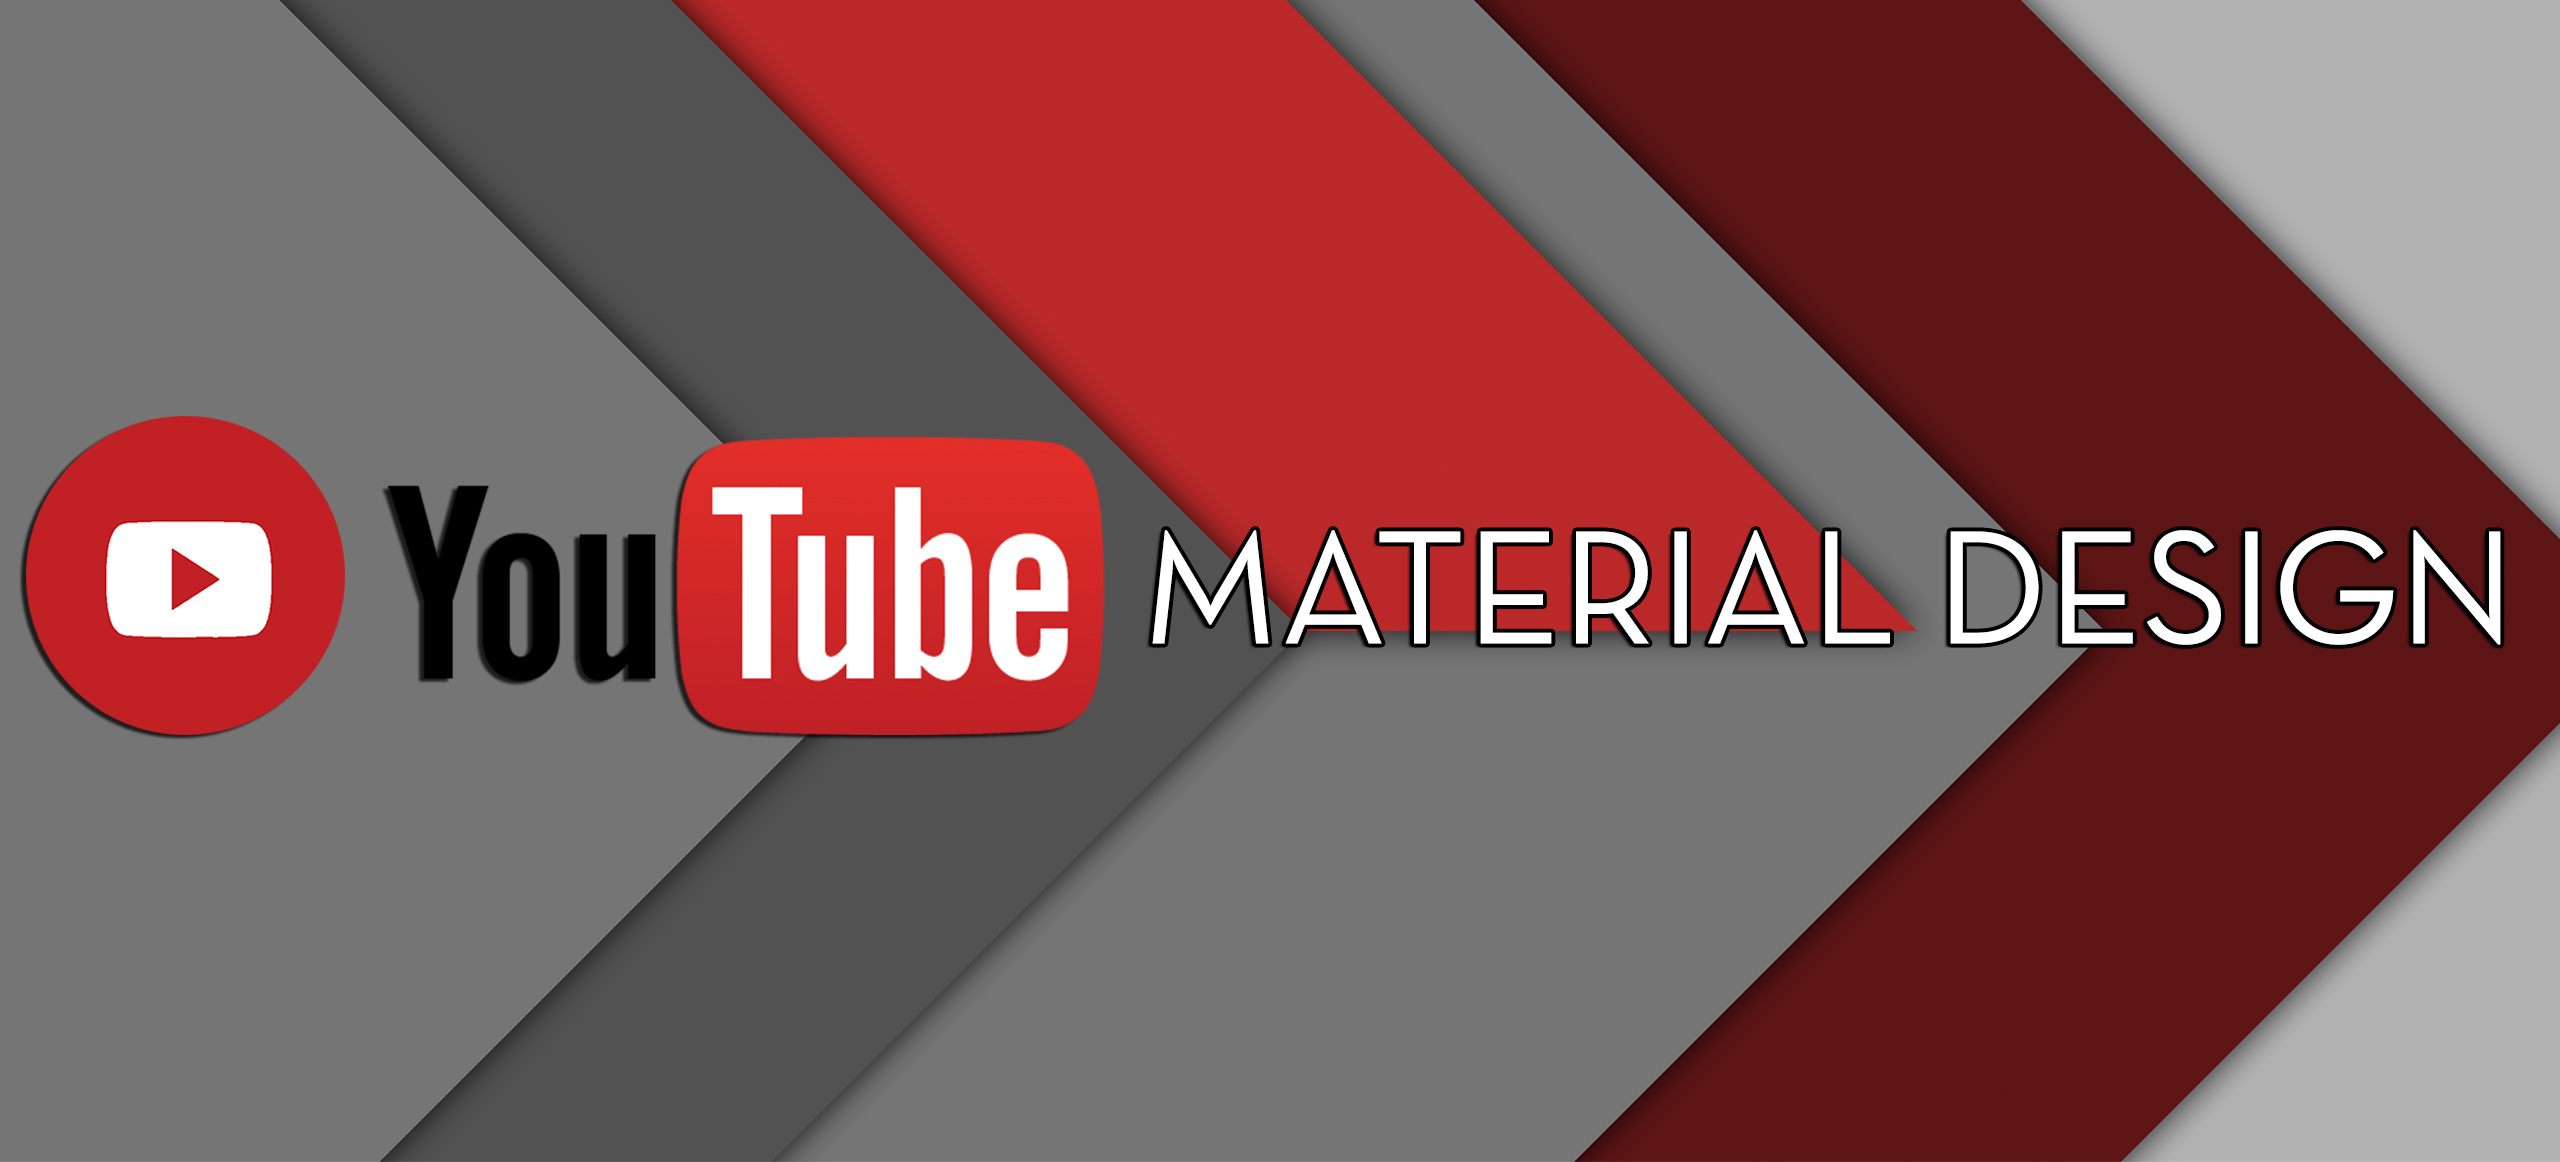 Material Design Youtube